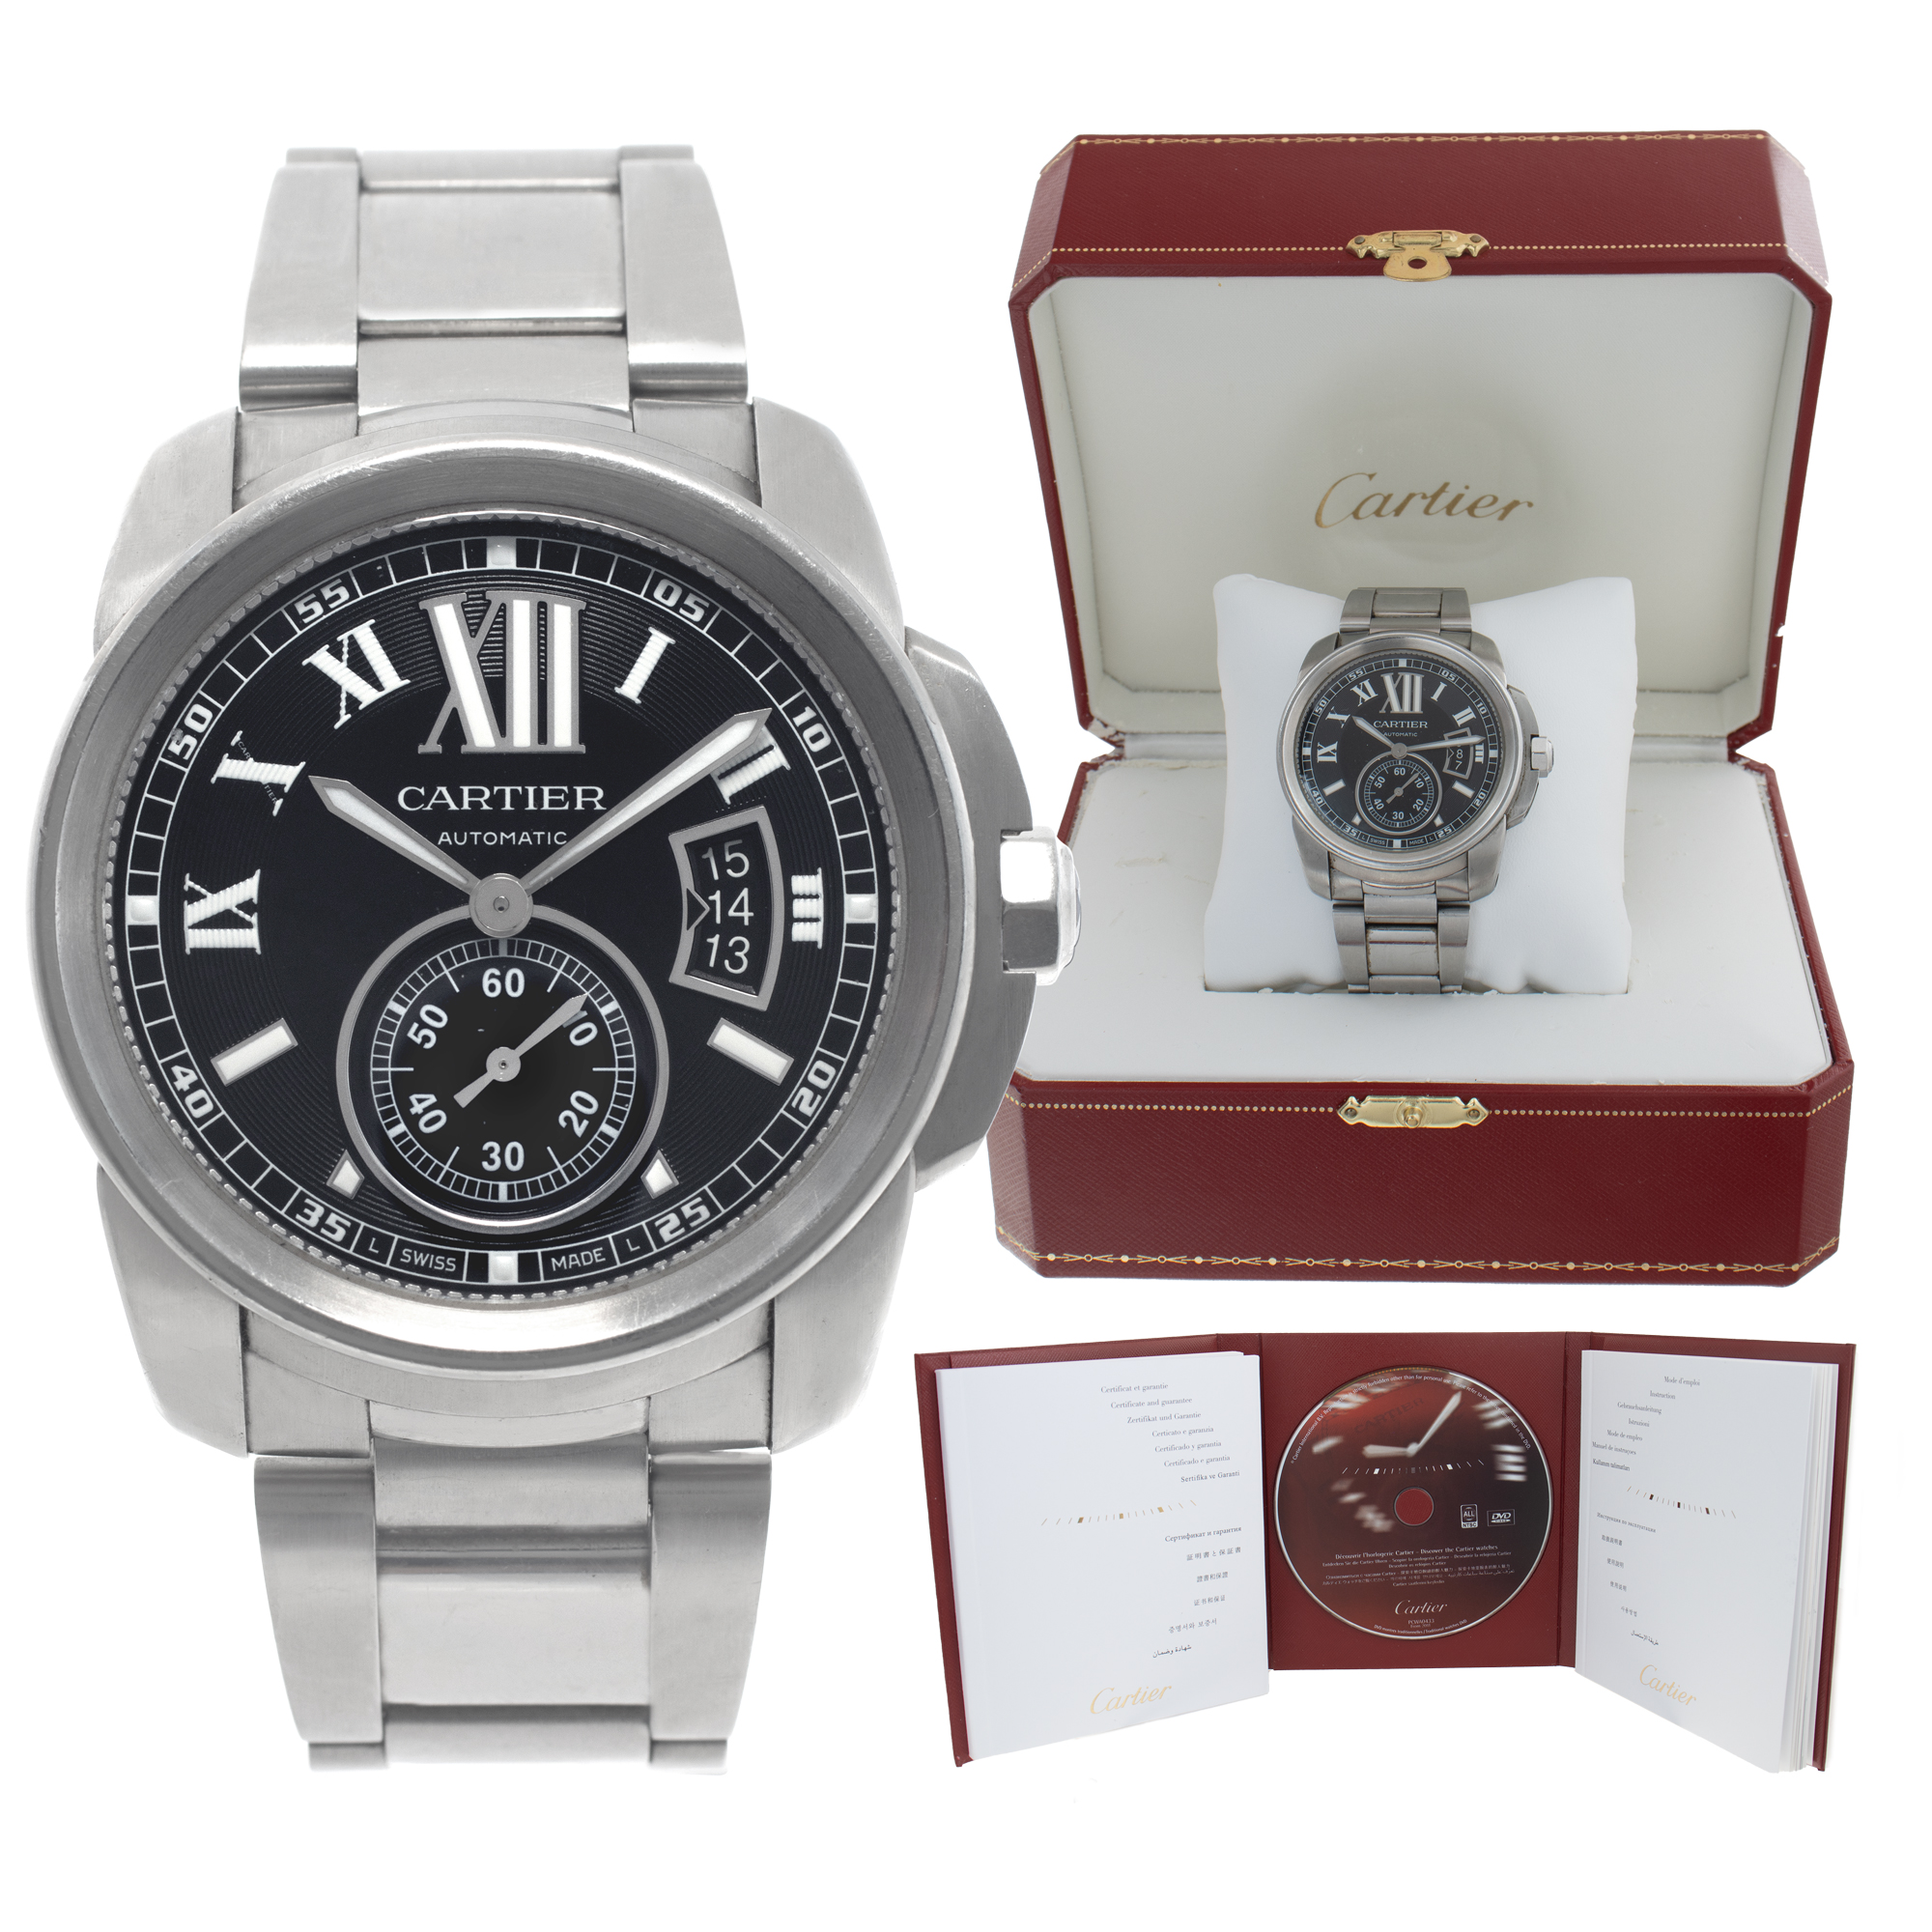 Cartier Calibre 42mm w7100016 (Watches)